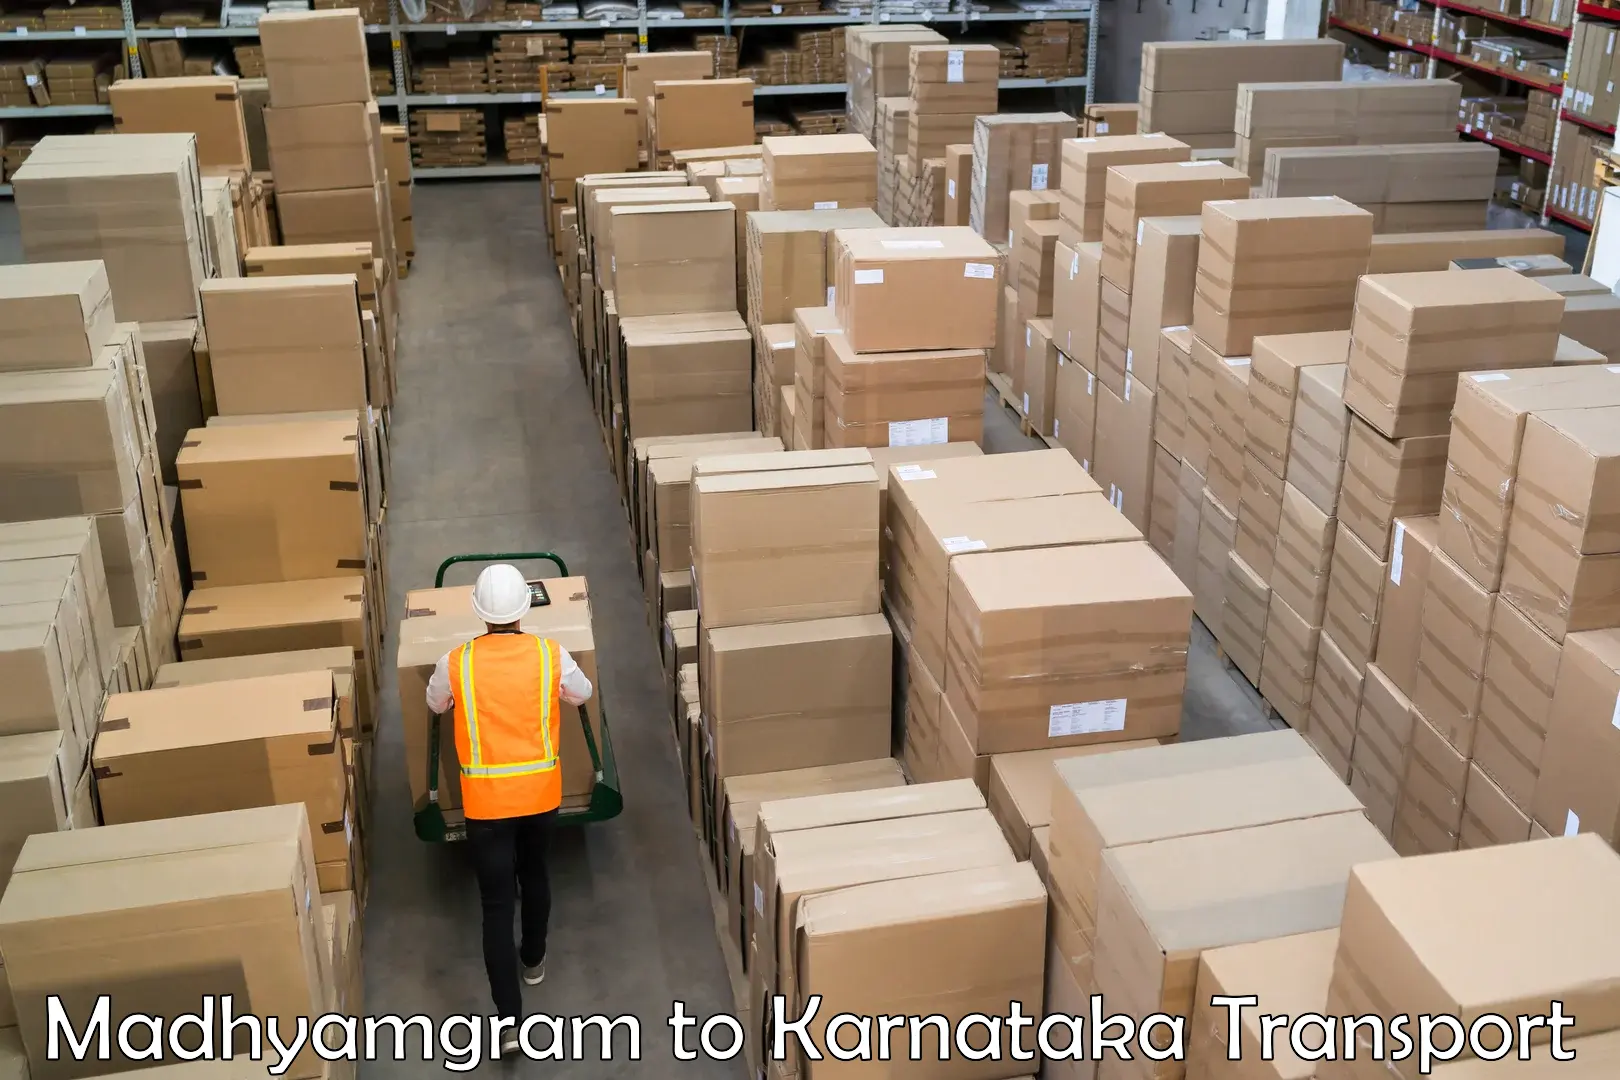 Shipping partner in Madhyamgram to Shorapur